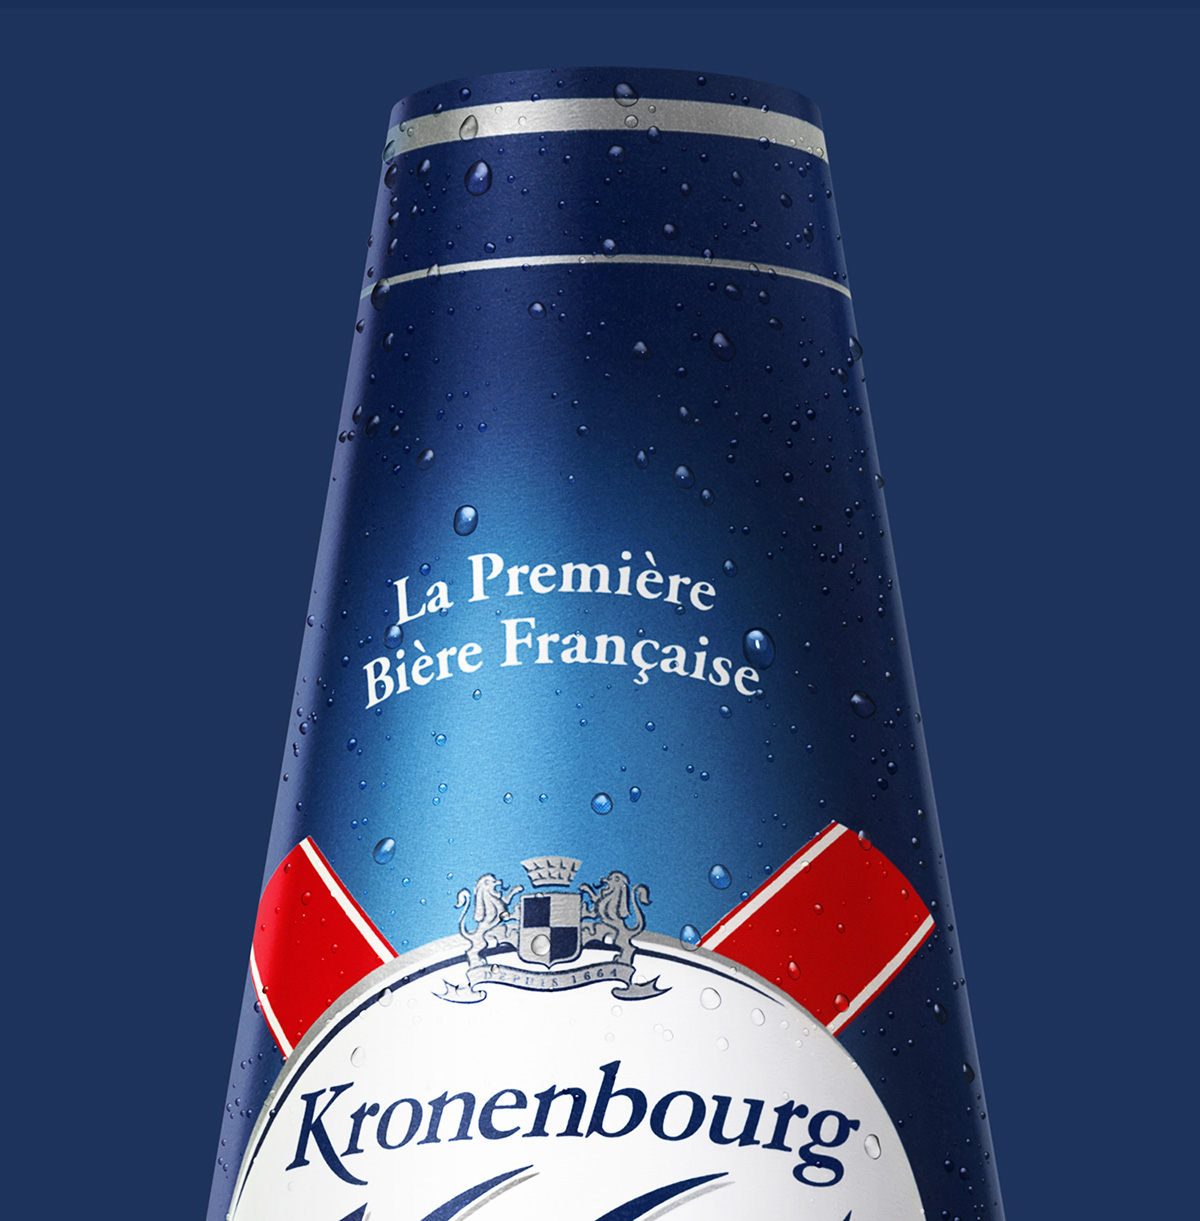 Souverein CGI 3D postproduction Carlsberg bottle beer Packshot luminous creative imaging fedde souverein